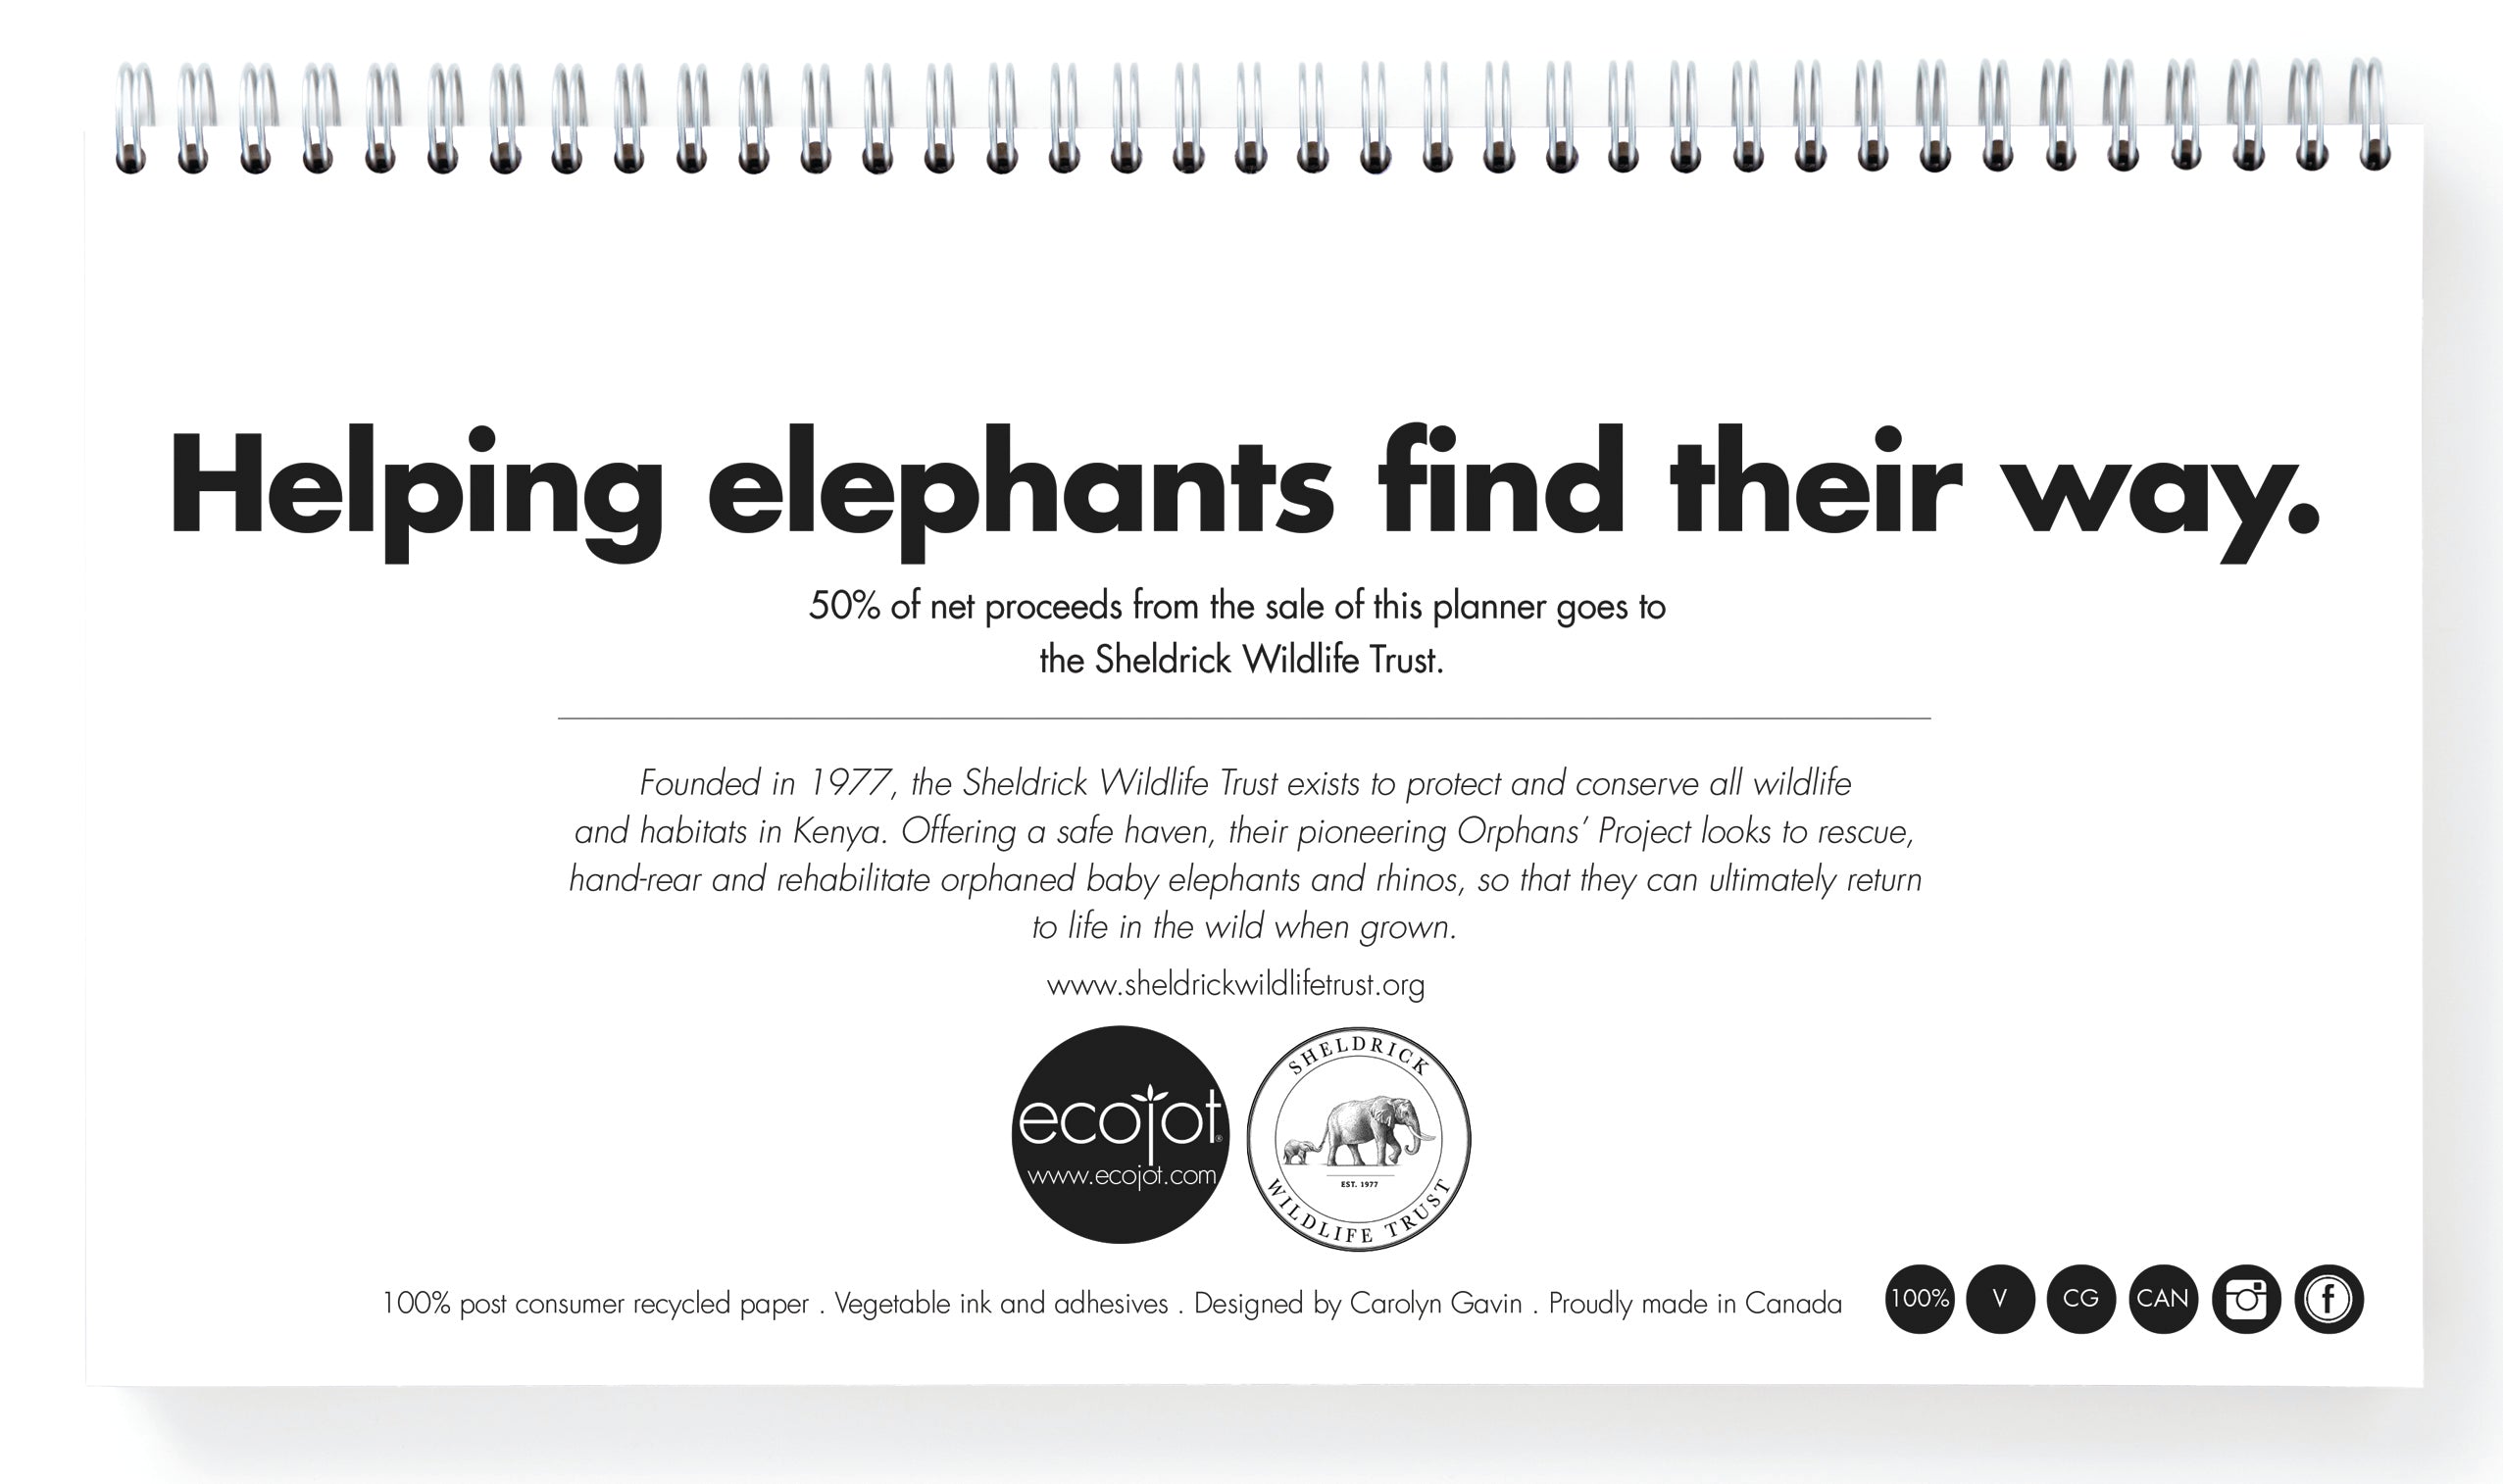 Elephant Love Jumbo Journal and Planner set